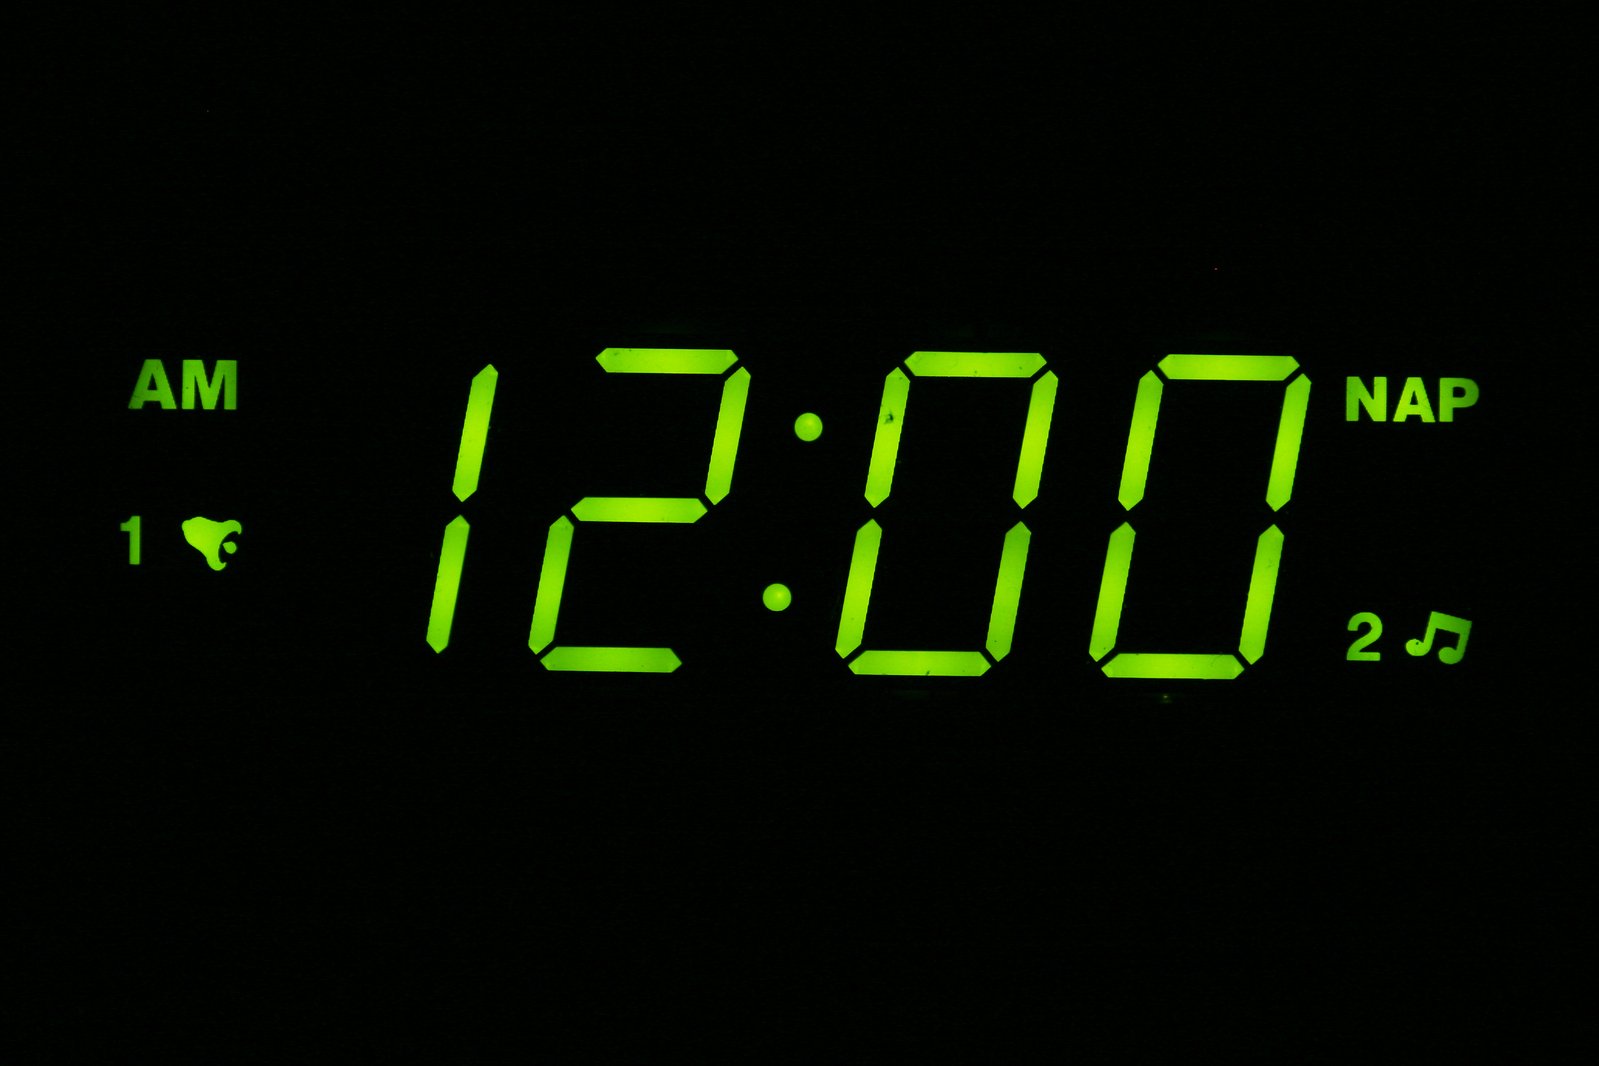 an alarm clock with twenty minutes remaining displayed